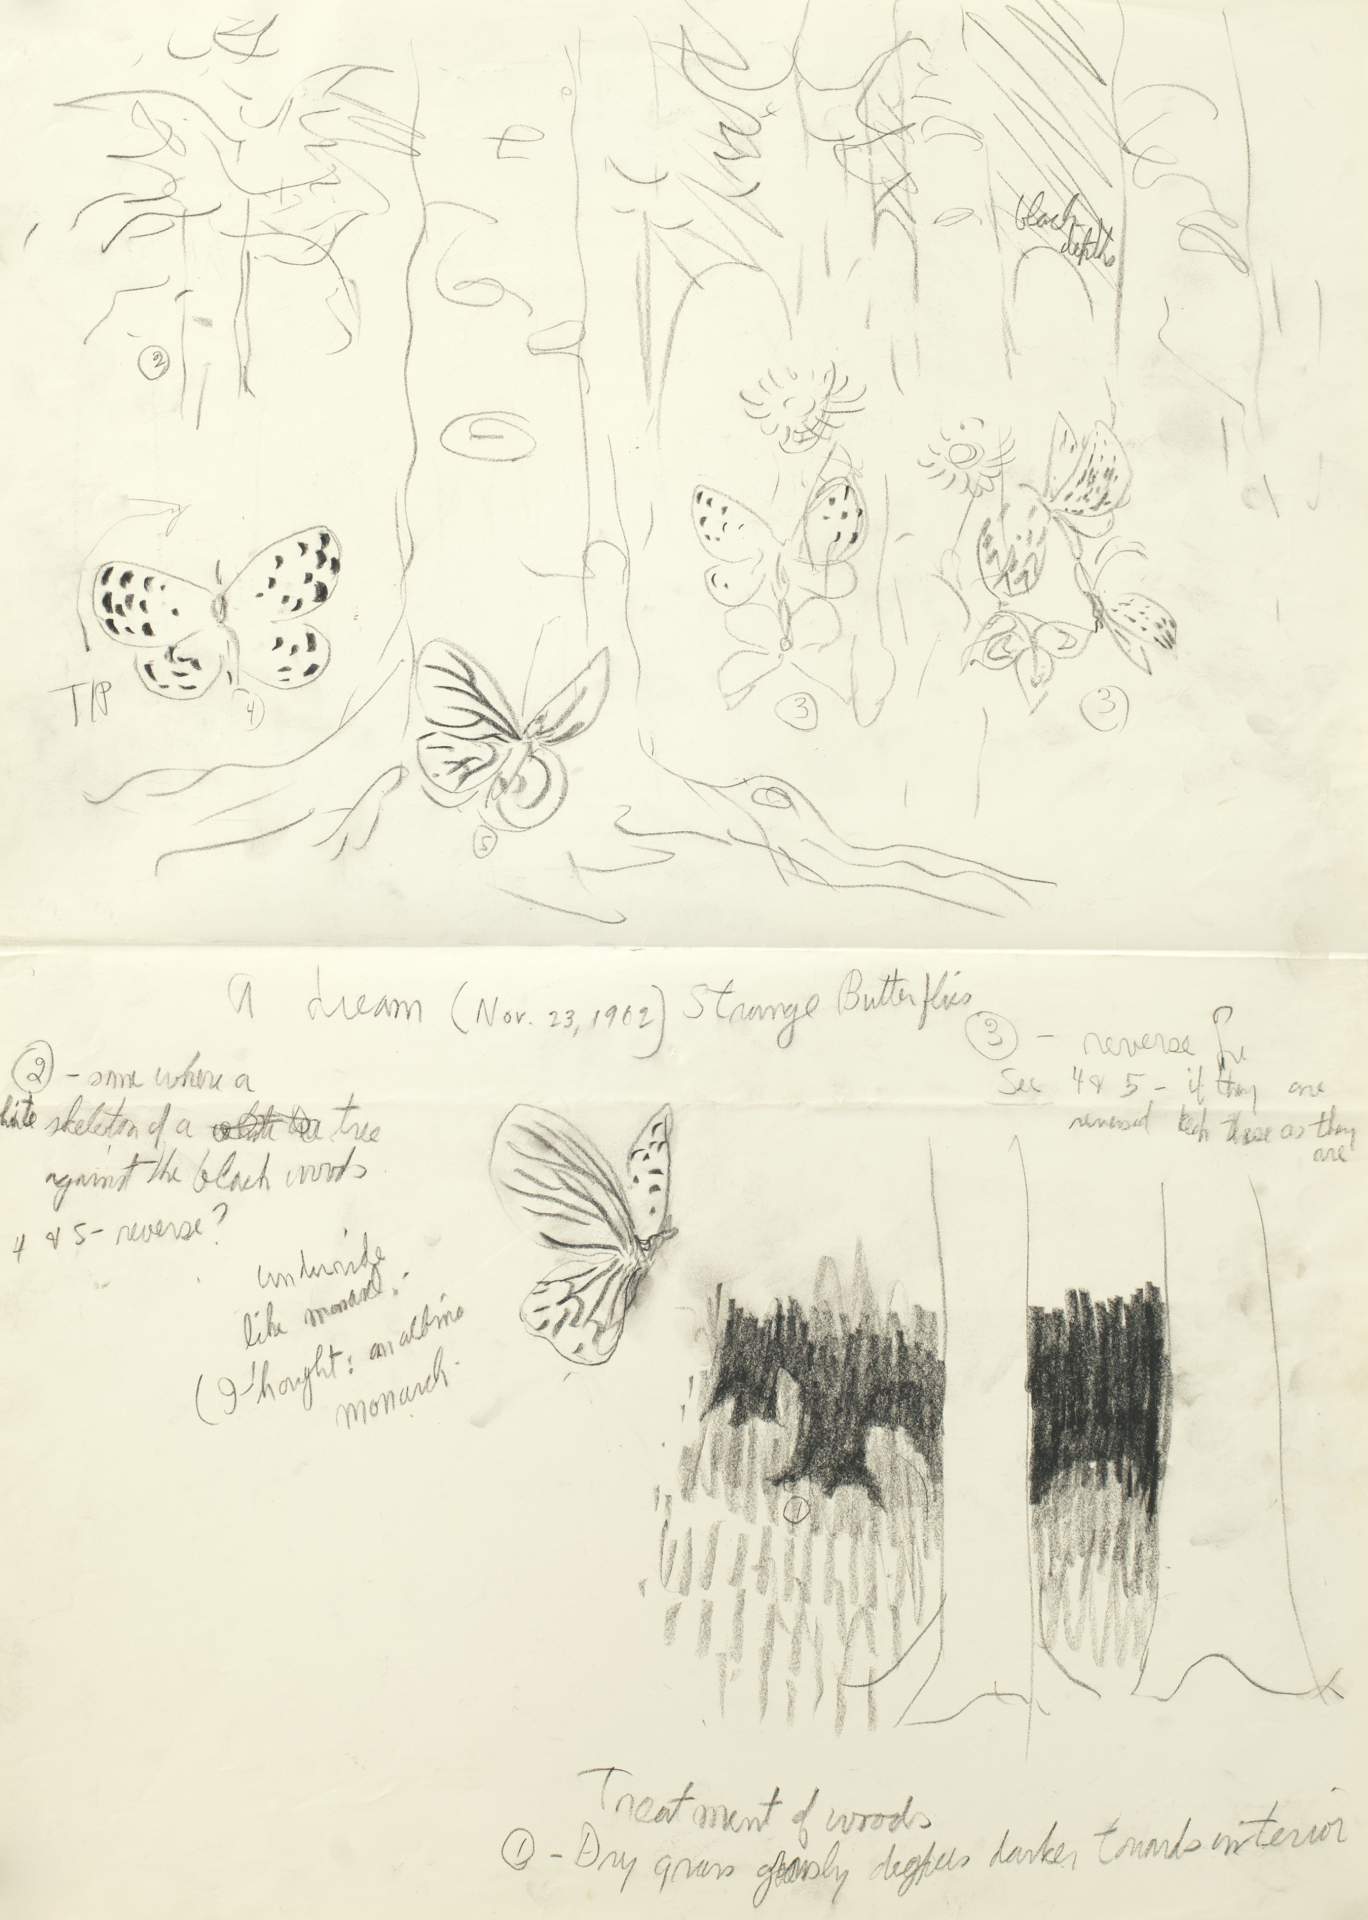 Untitled (A Dream (Nov. 23, 1962) Strange Butterflies)